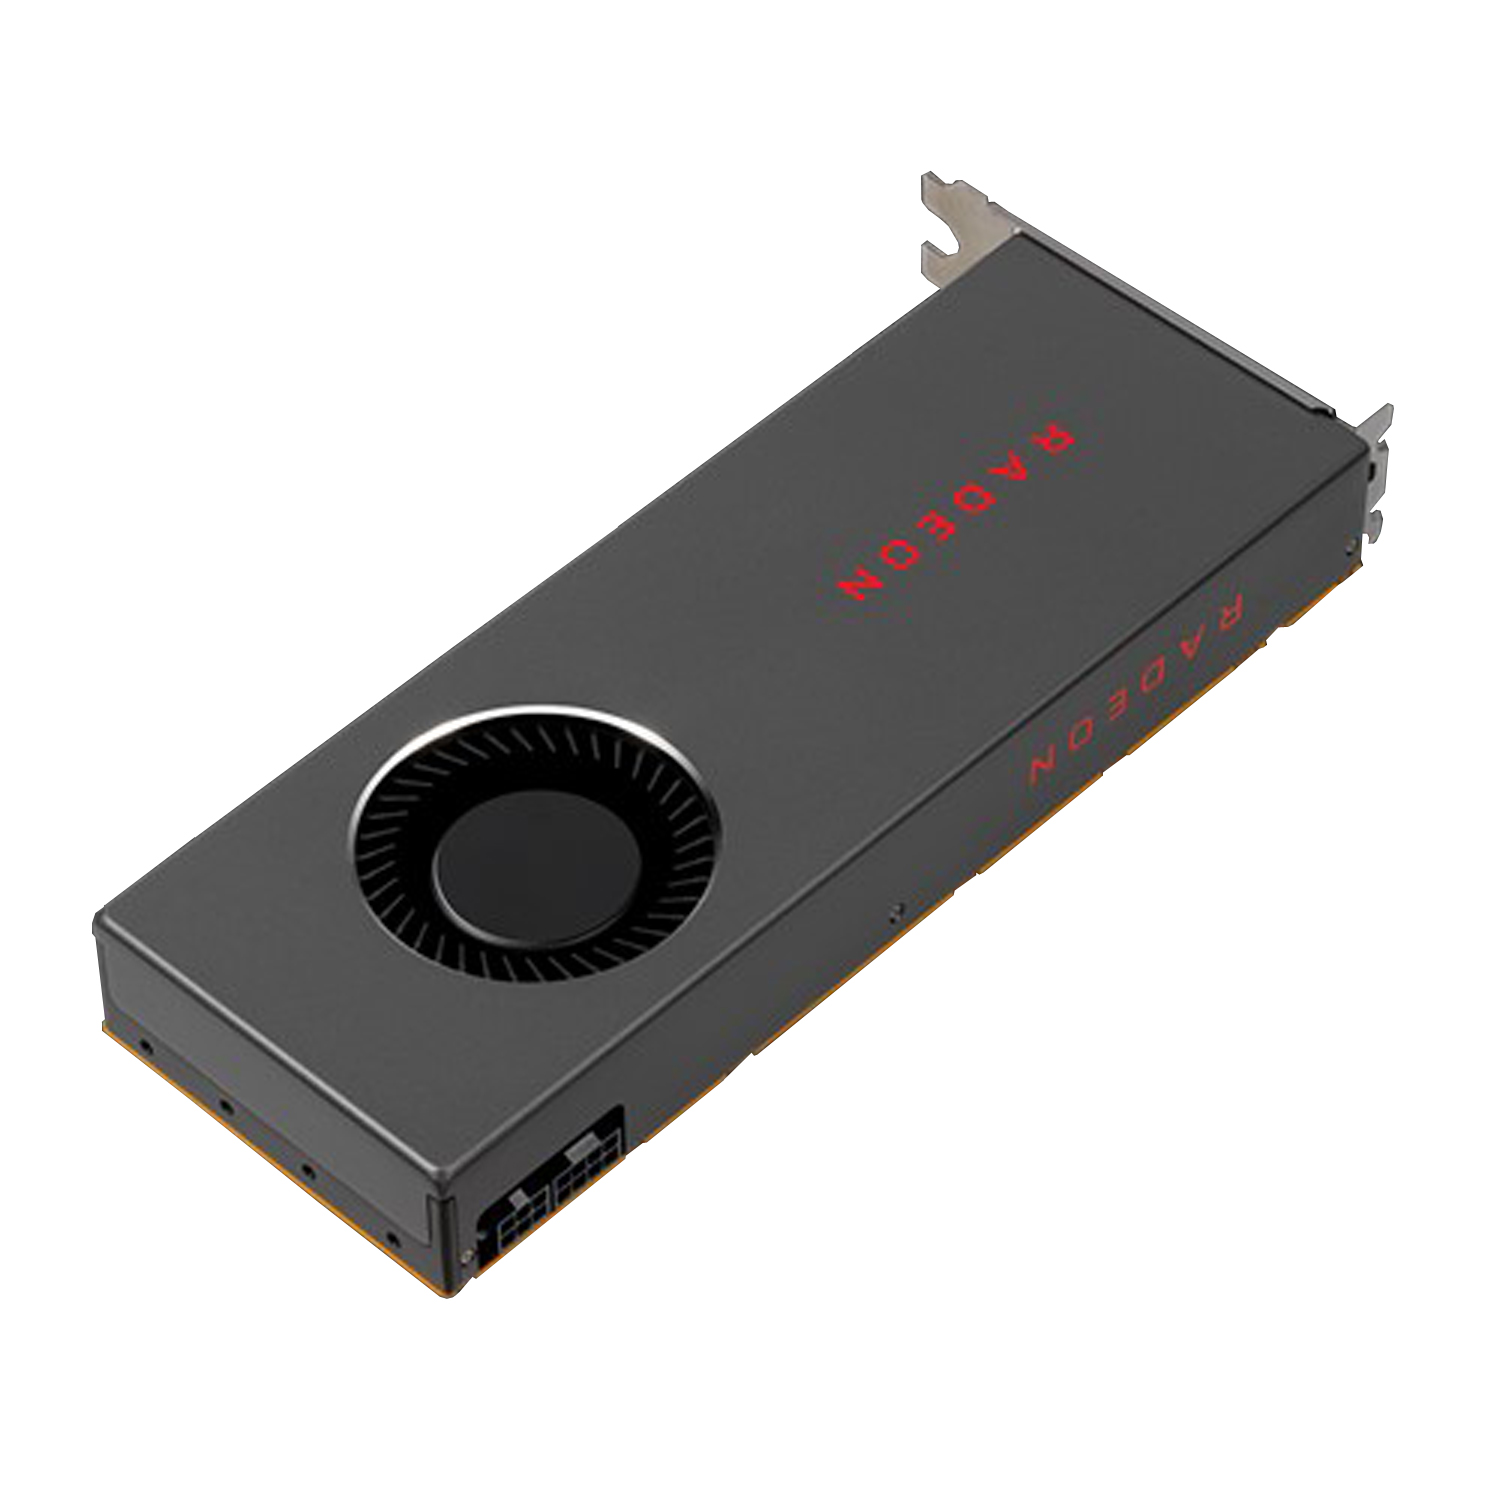 ASUS AMD Radeon RX 5700 Graphics Card, Black - image 4 of 4